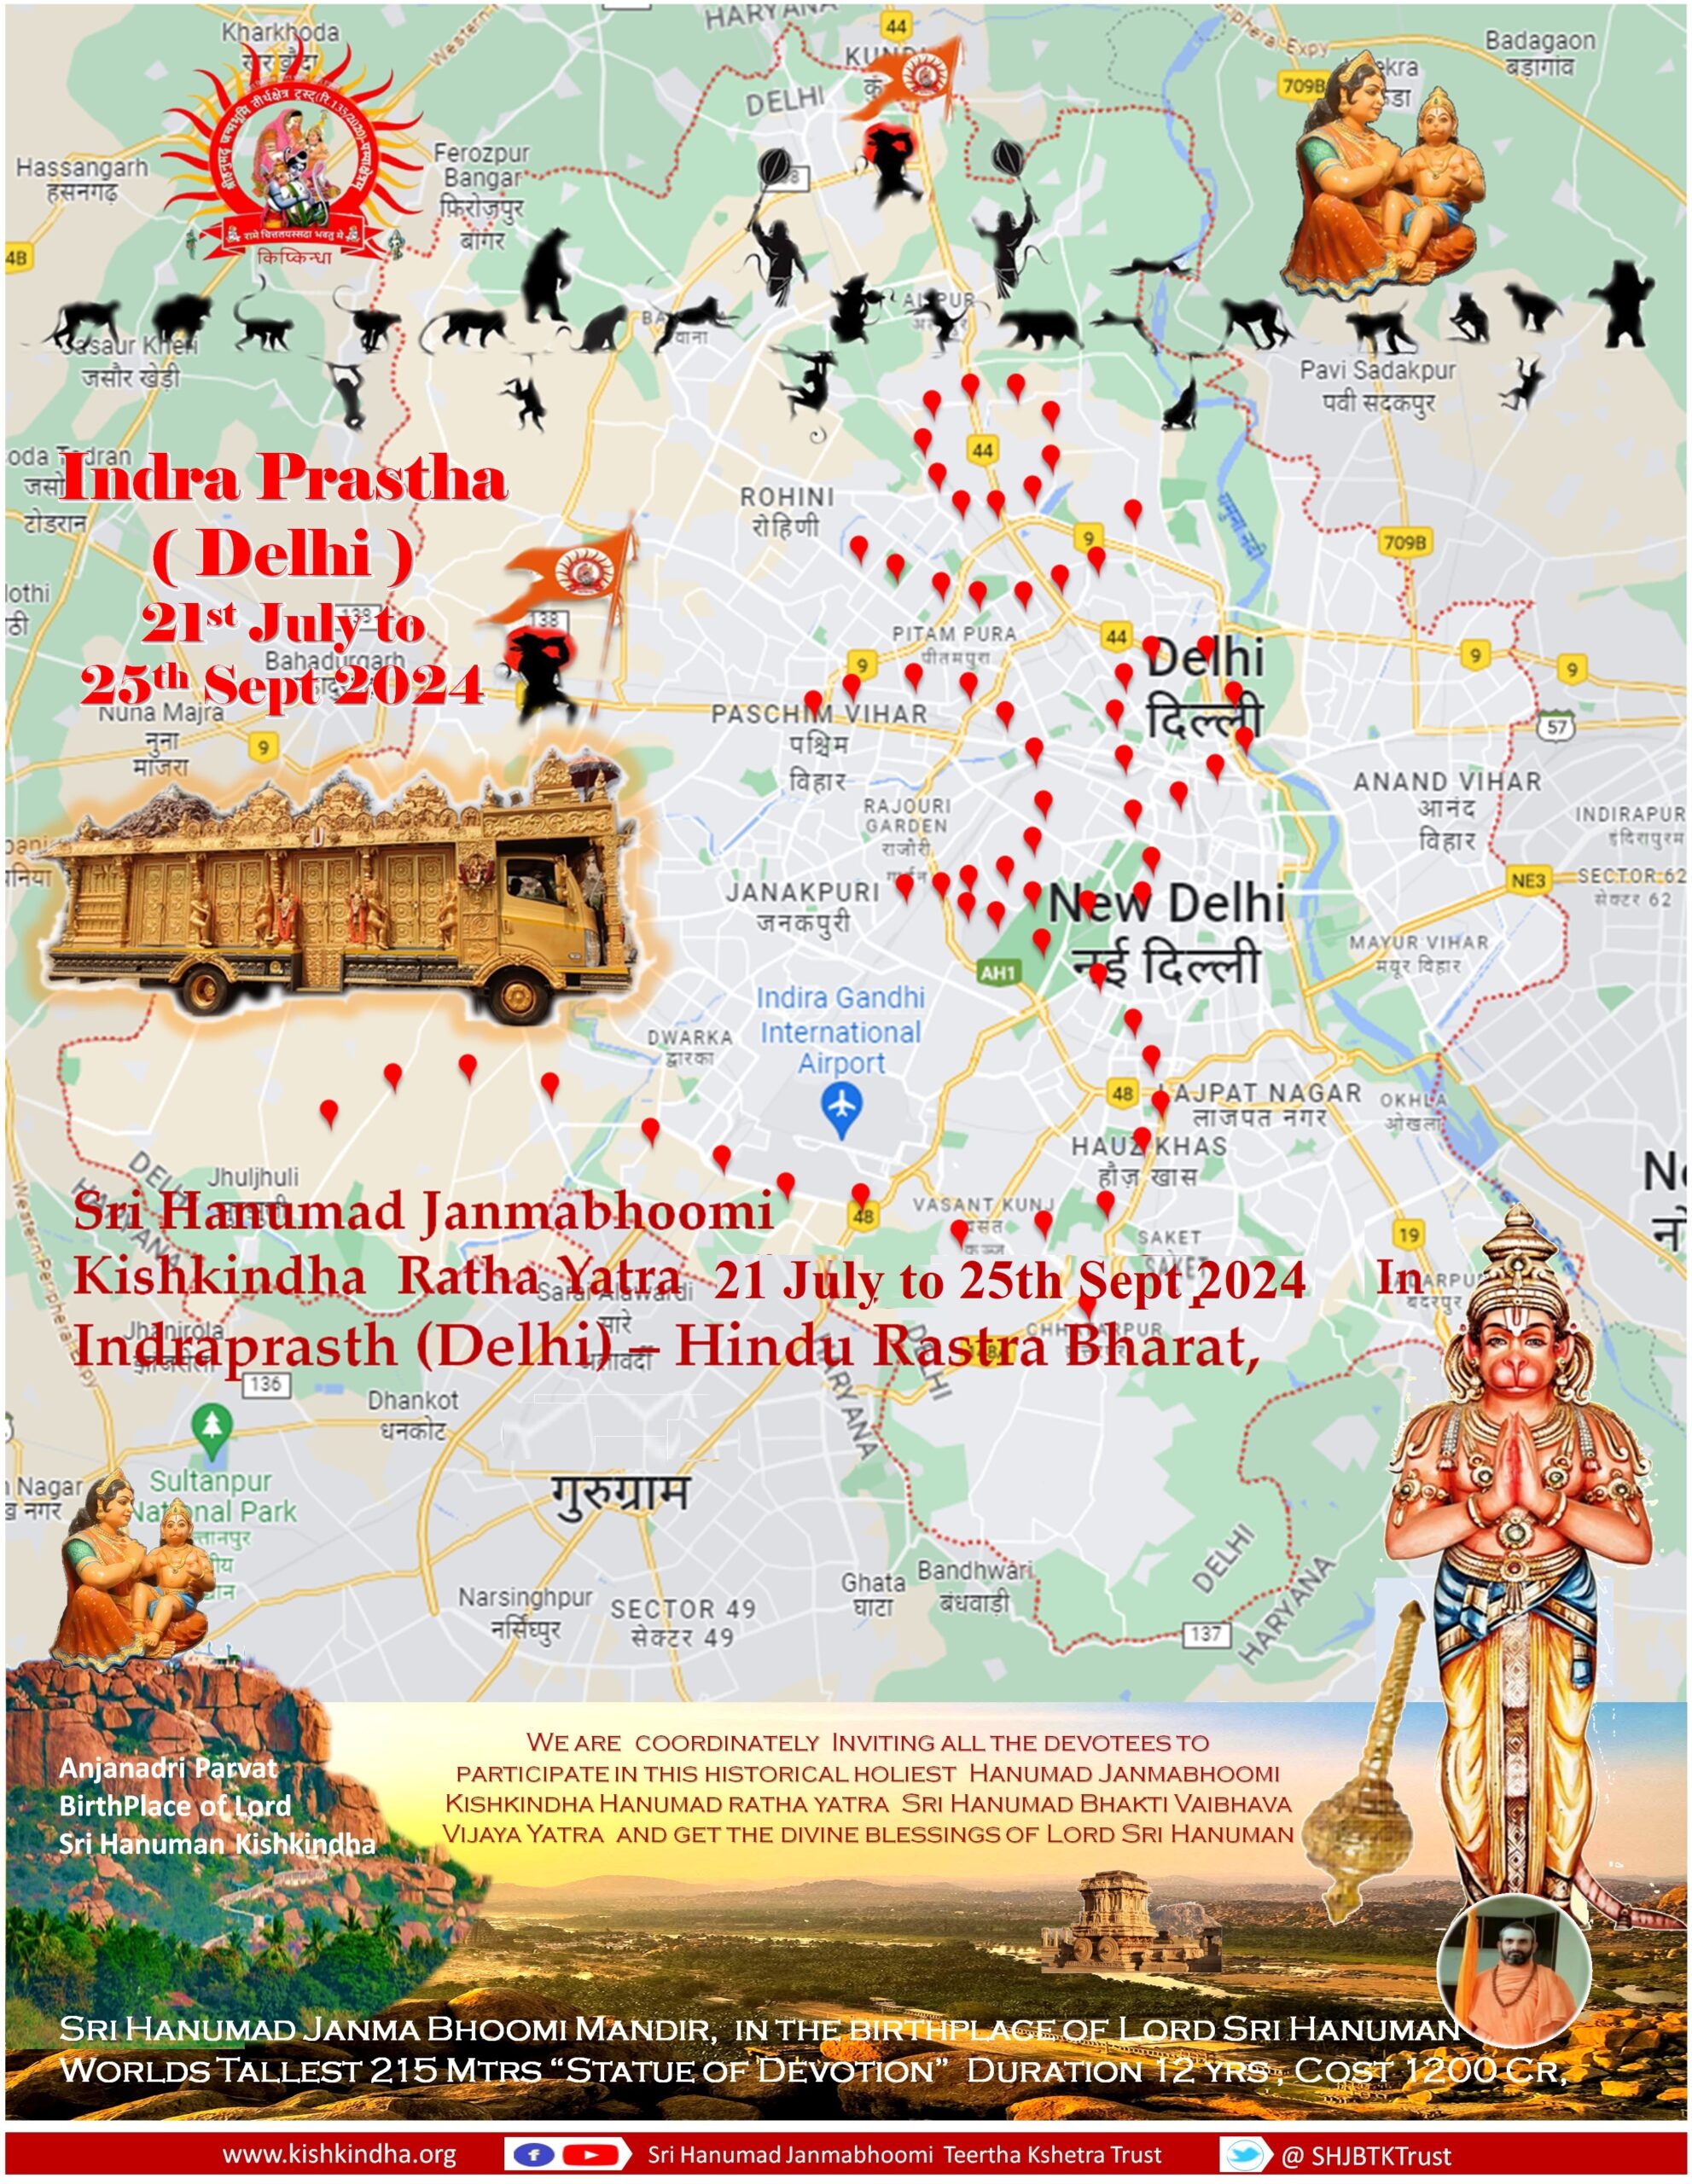 4th Year 2nd Phase Sri Kishkindha Ratha Yatra in Indra Prastha ( Delhi) for 2 Months 21st July to 25th Sept 2024